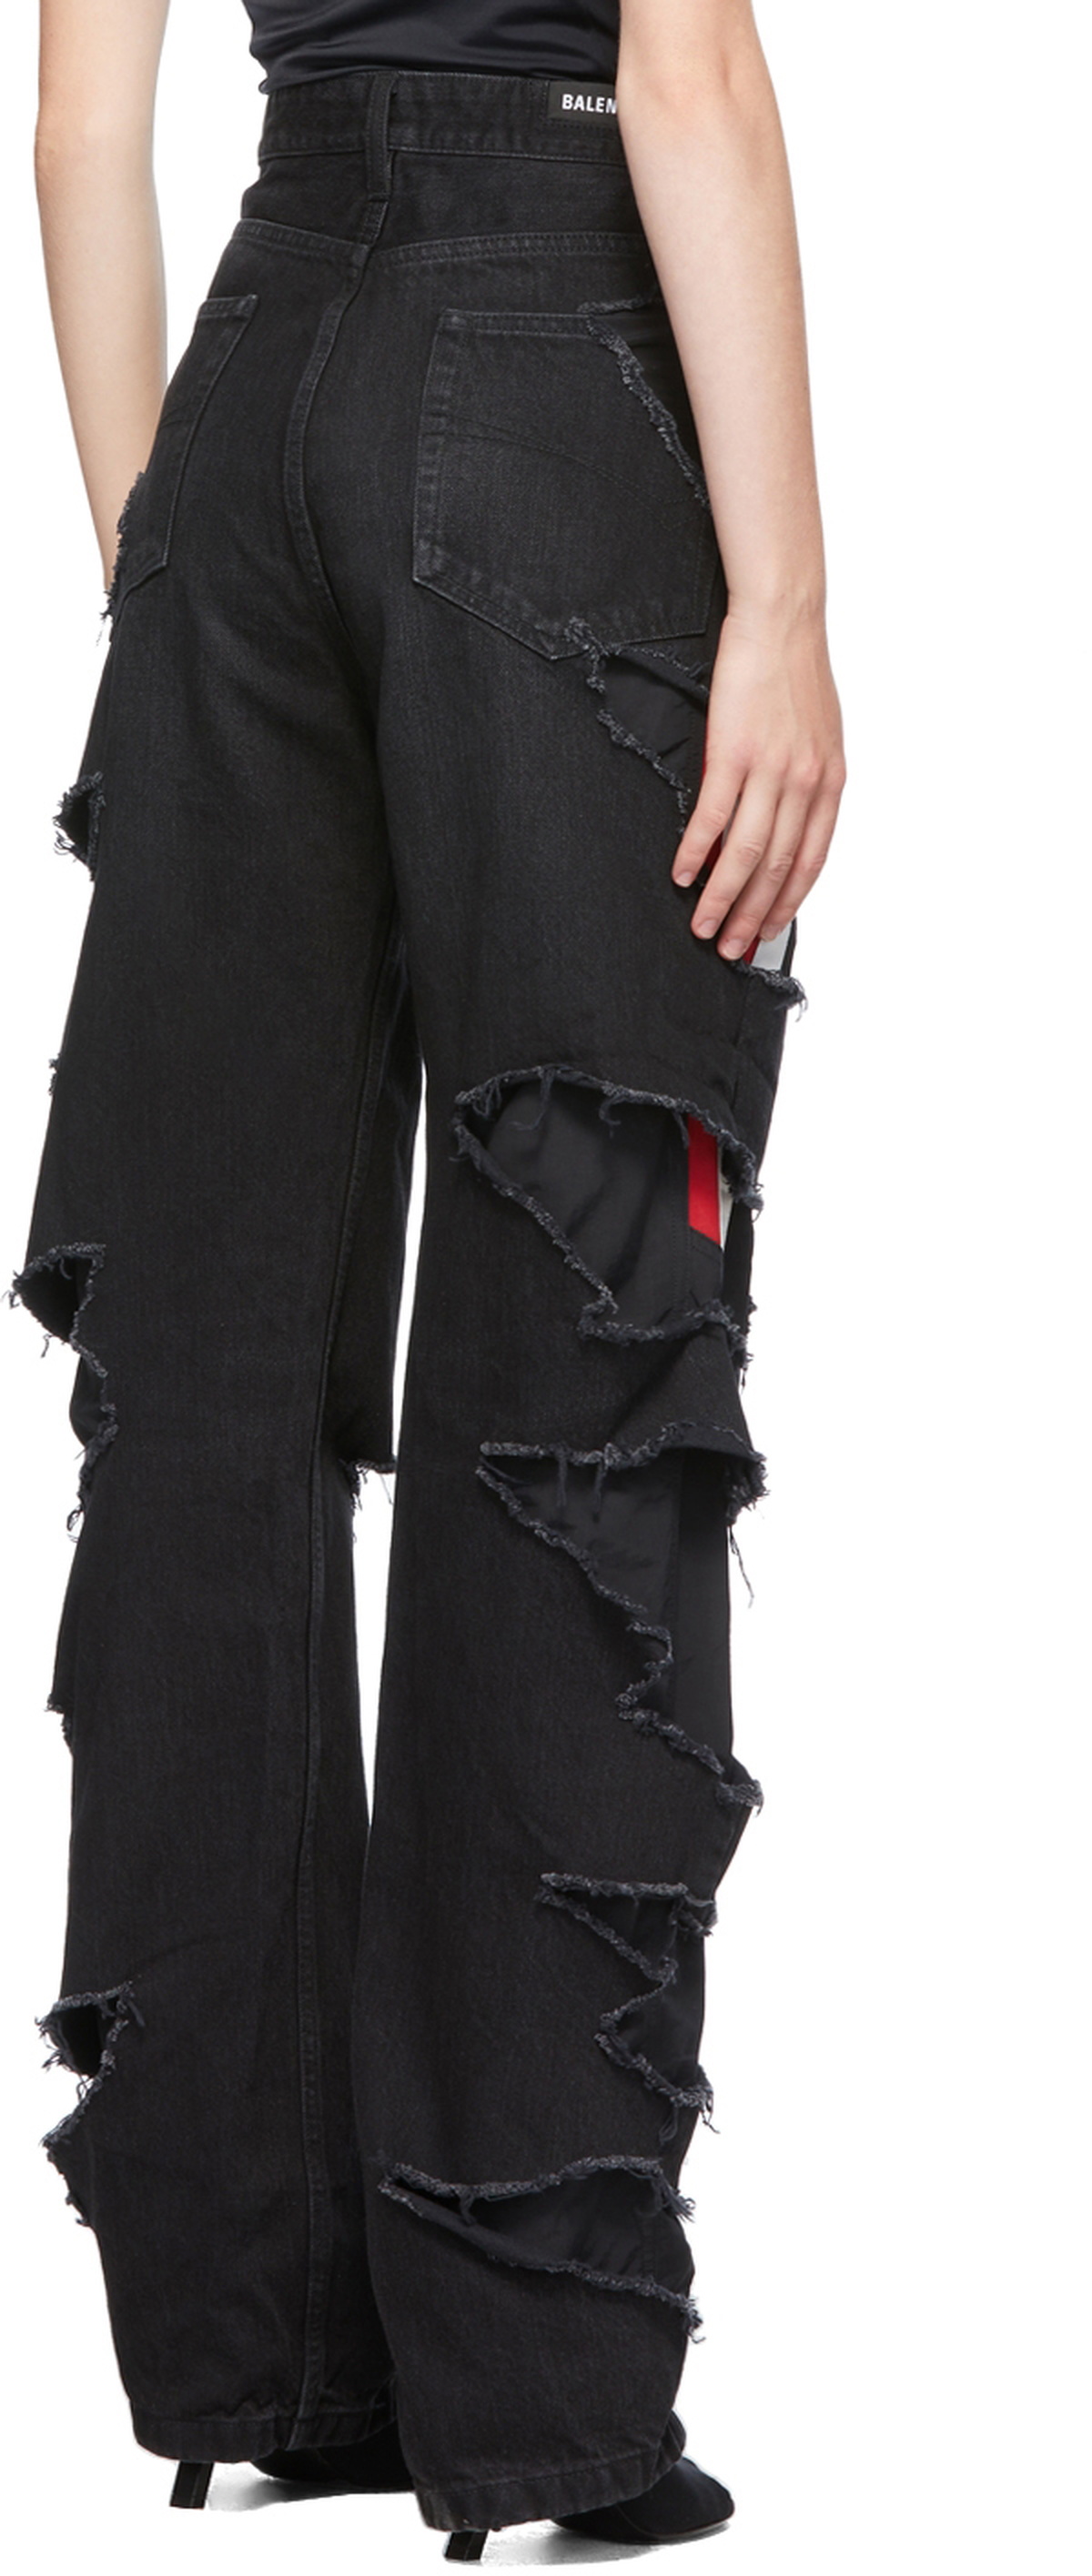 Balenciaga Black Slashed Relaxed-Fit Jeans Balenciaga